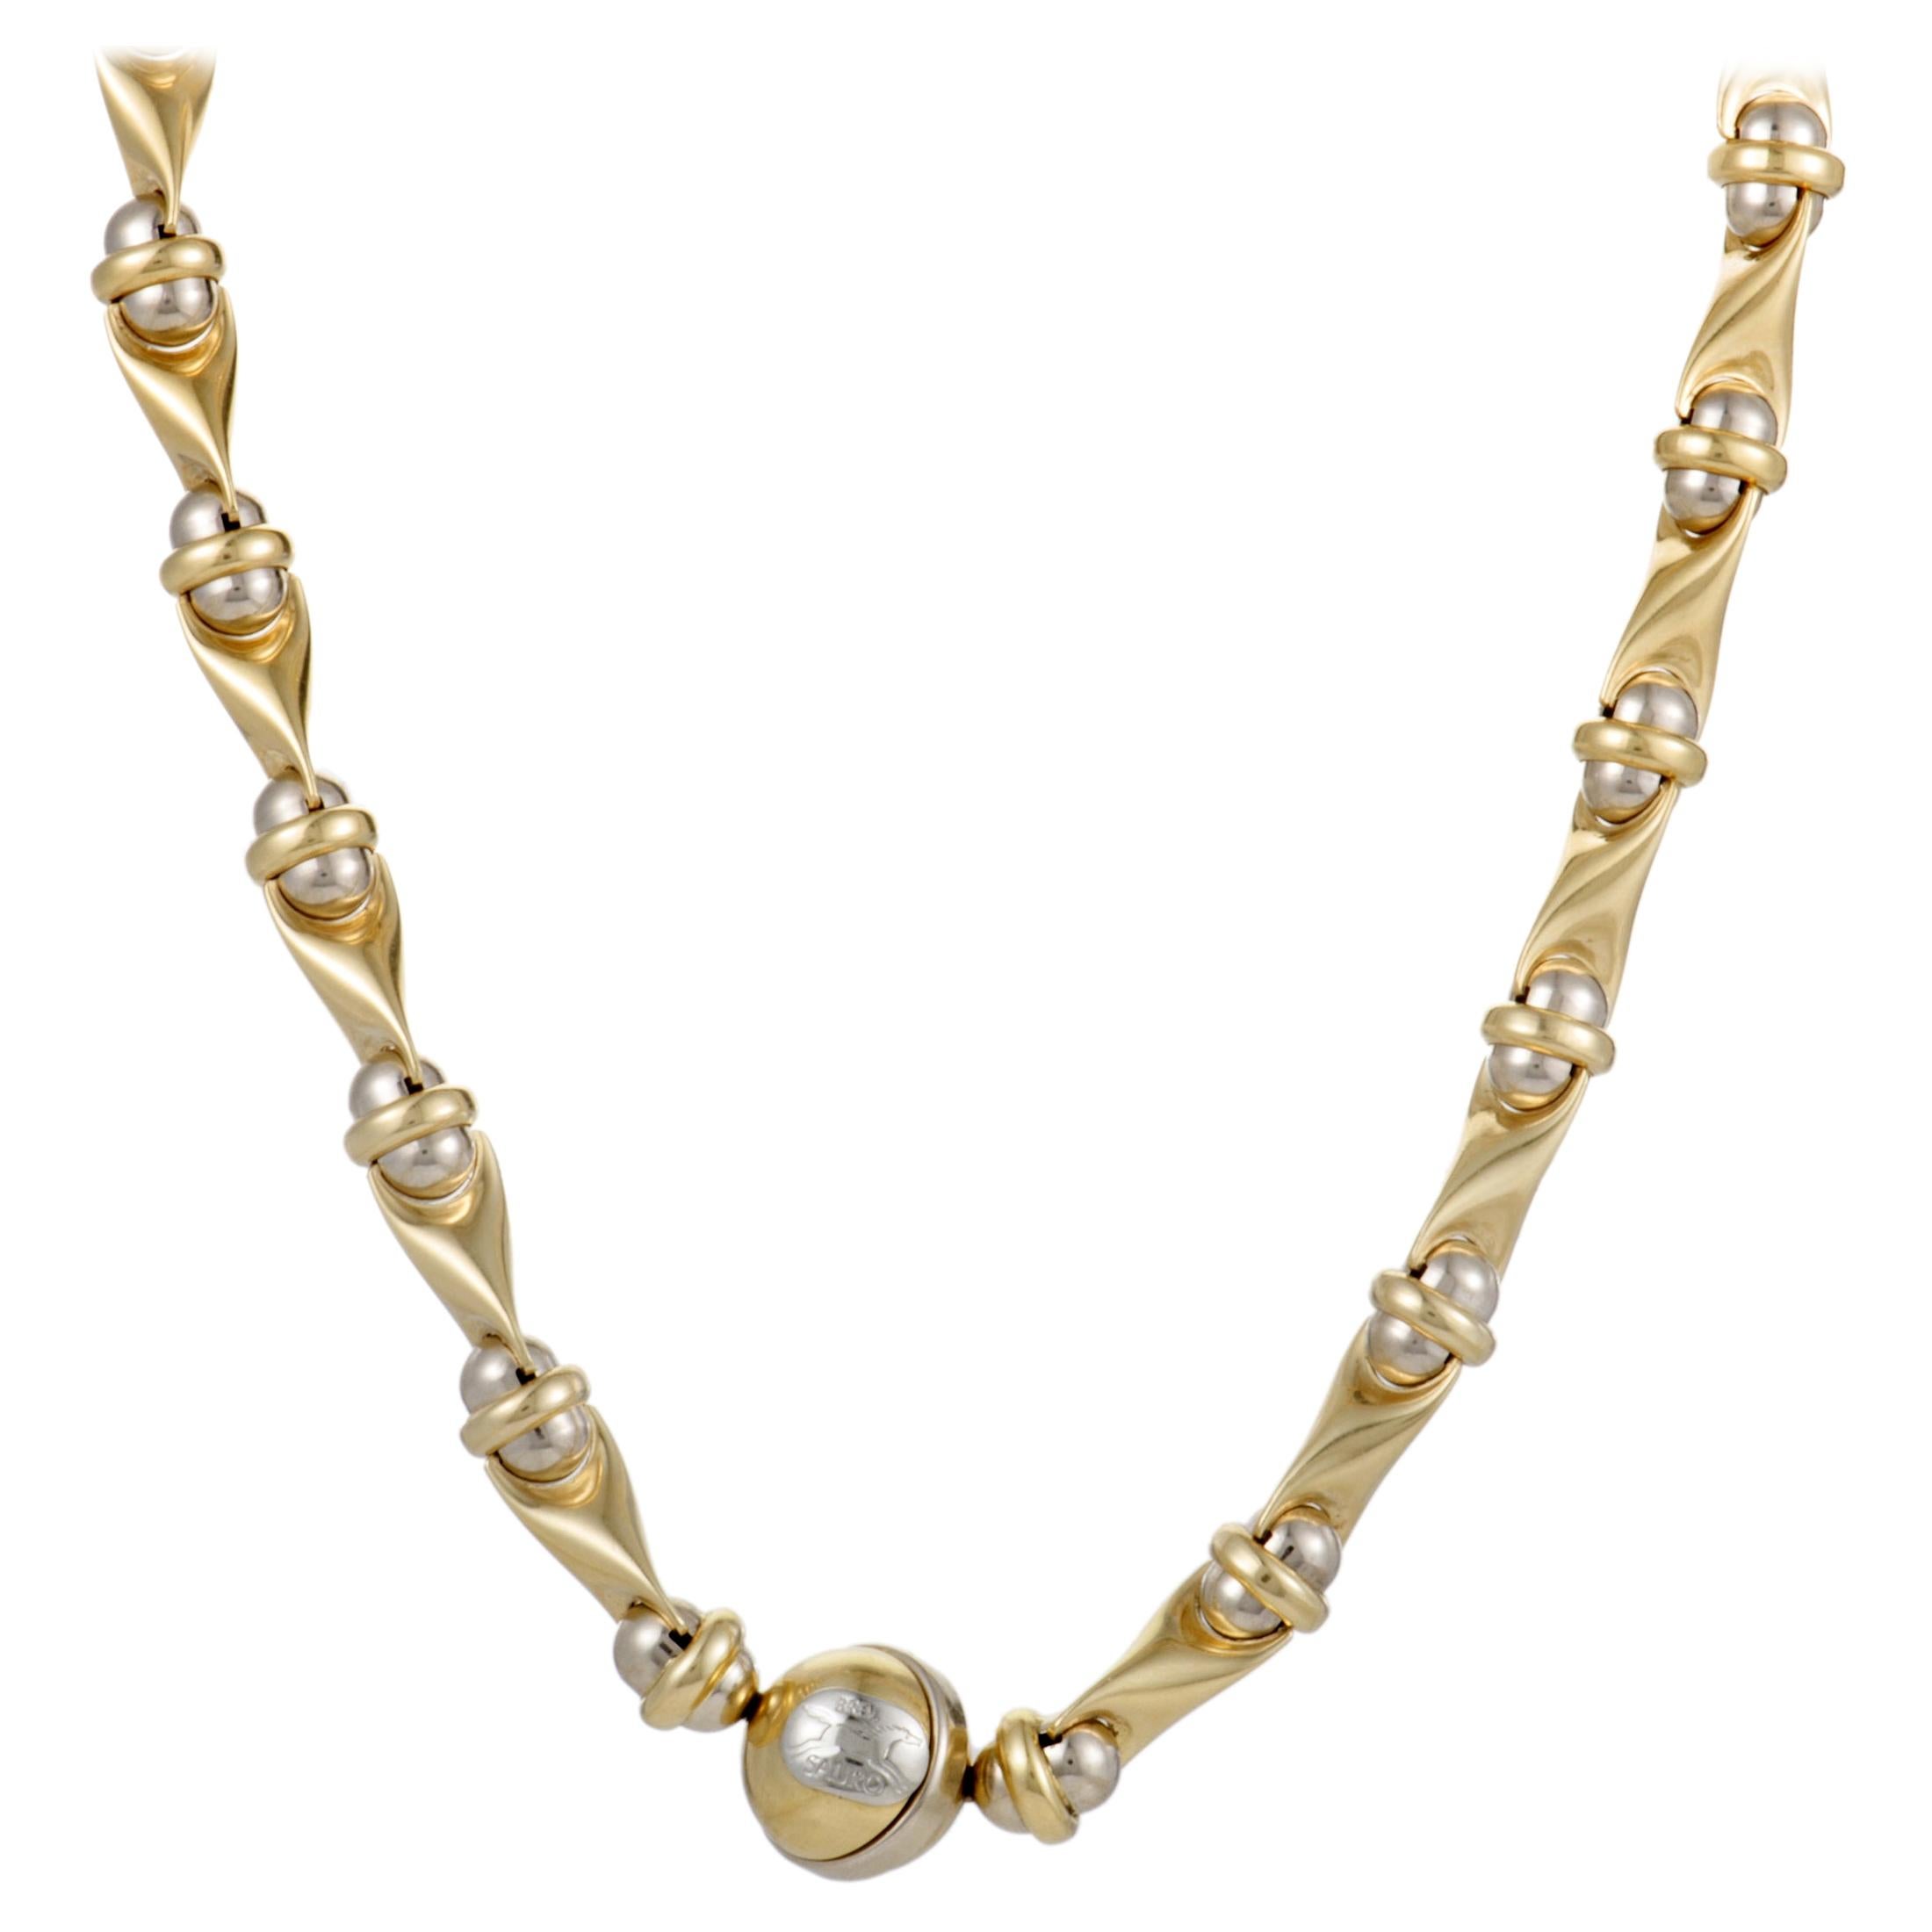 Sauro 18 Karat Yellow and White Gold Collar Necklace